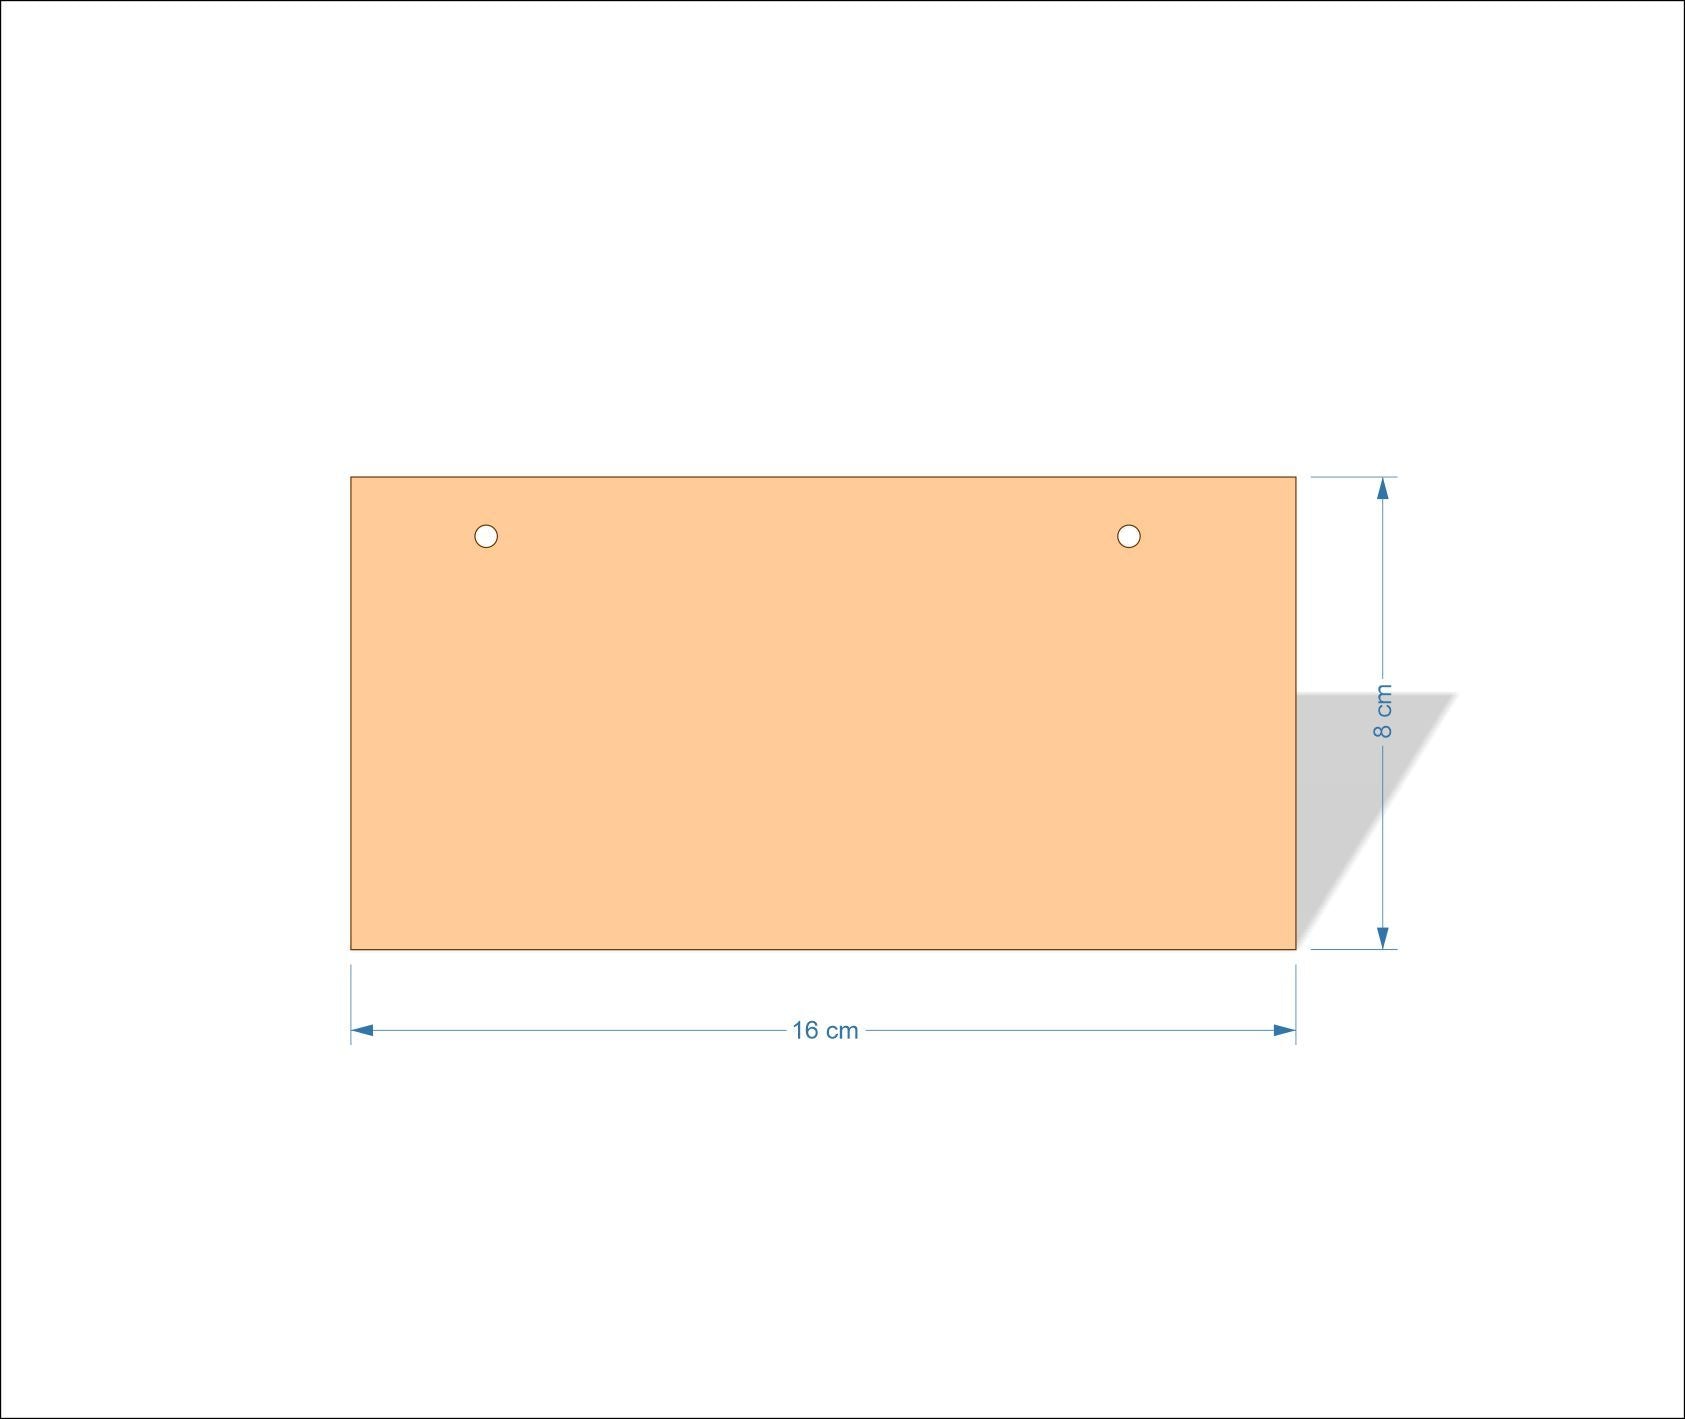 16 cm X 8 cm 3mm MDF Plaques with square corners